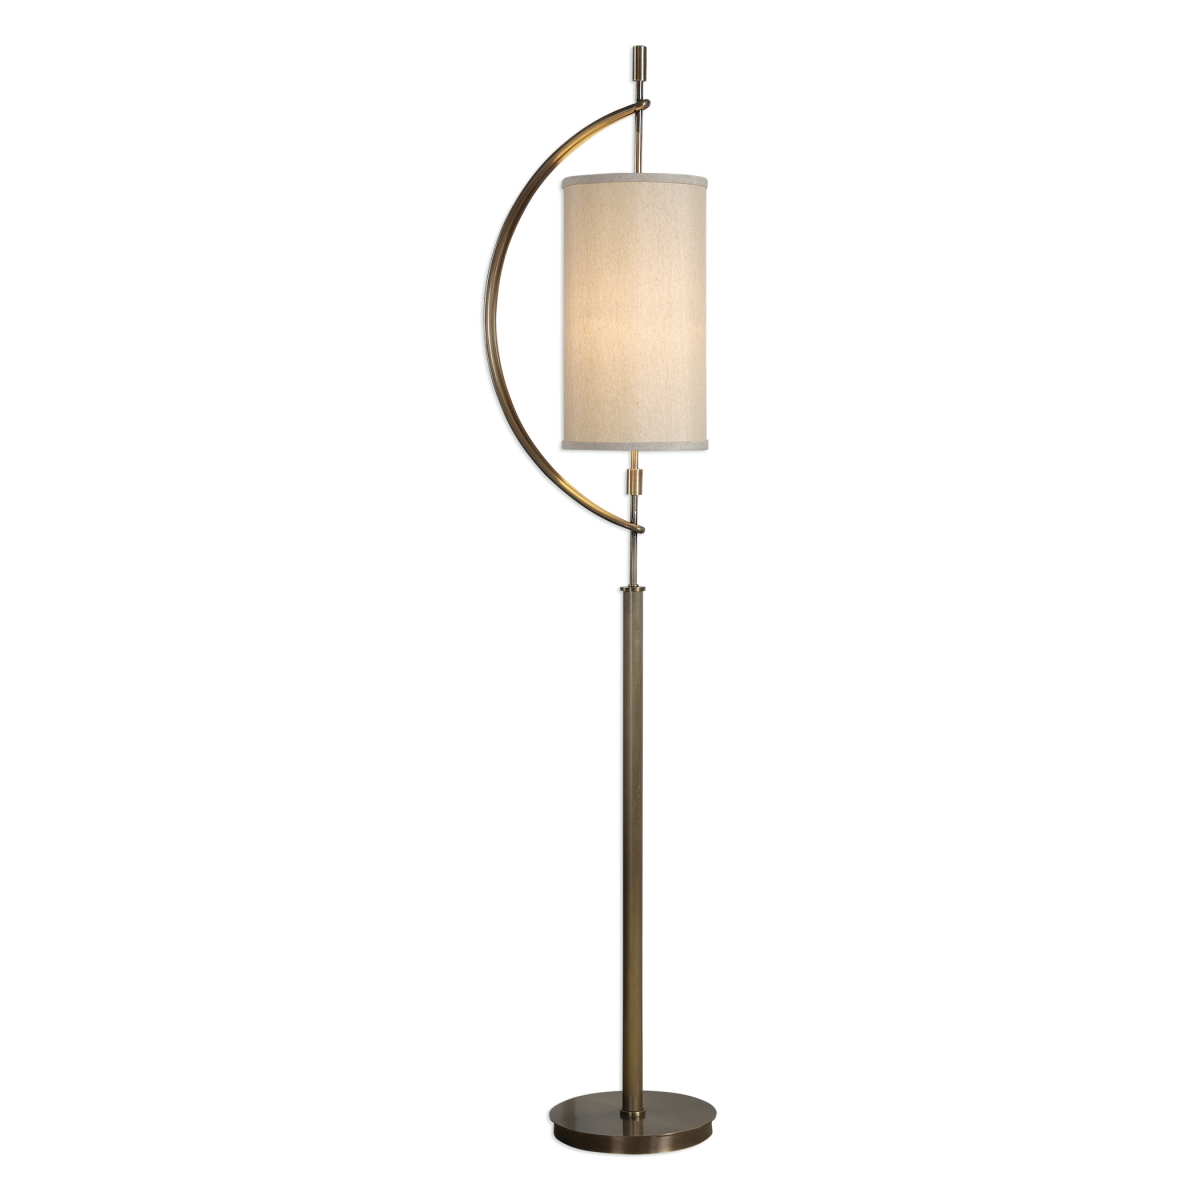 Picture of 212 Main 28151-1 Balaour Antique Brass Floor Lamp